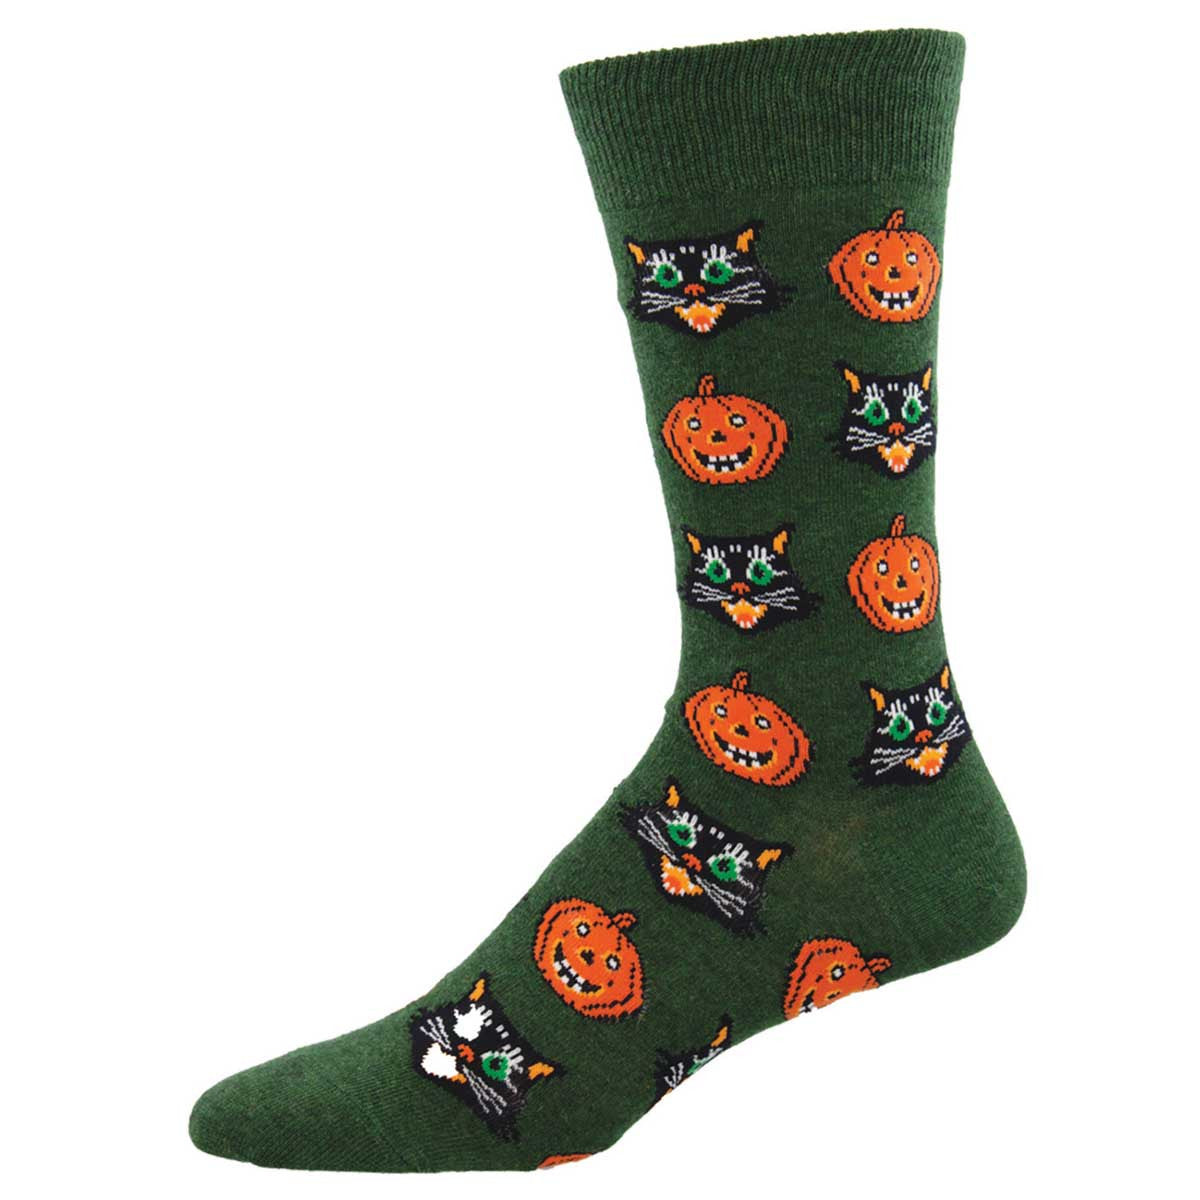 Socksmith Vintage Halloween Crew Socks - YOUAREMYPOISON